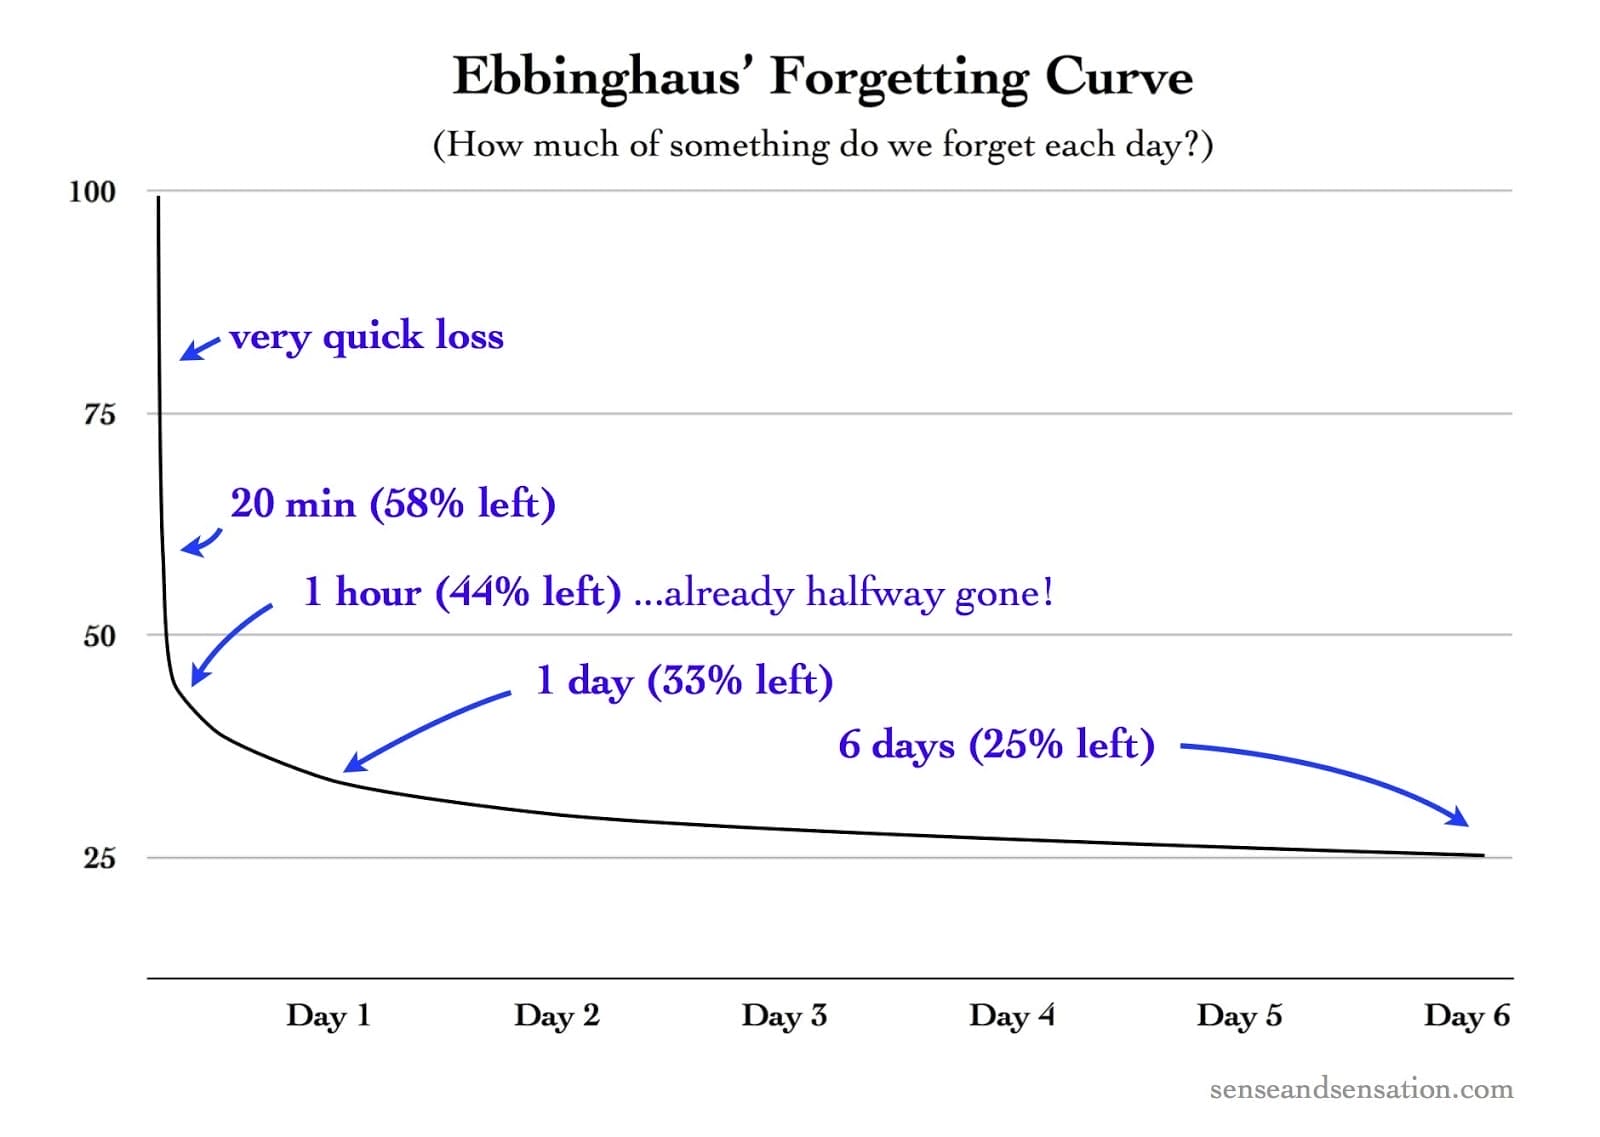 Ebbinghaus' Forgetting Curve